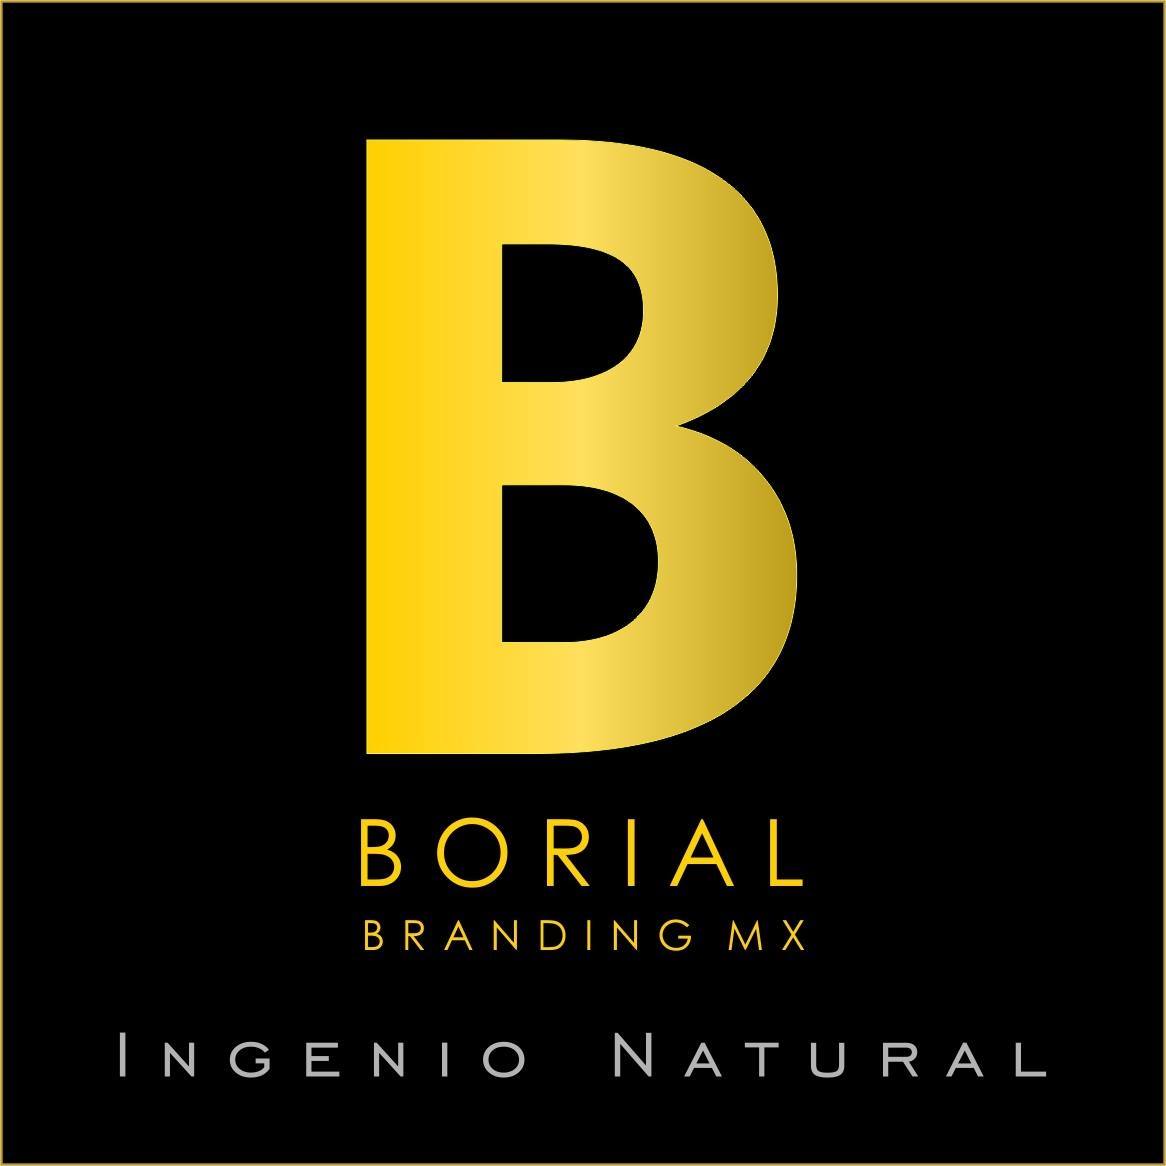 Borial Branding